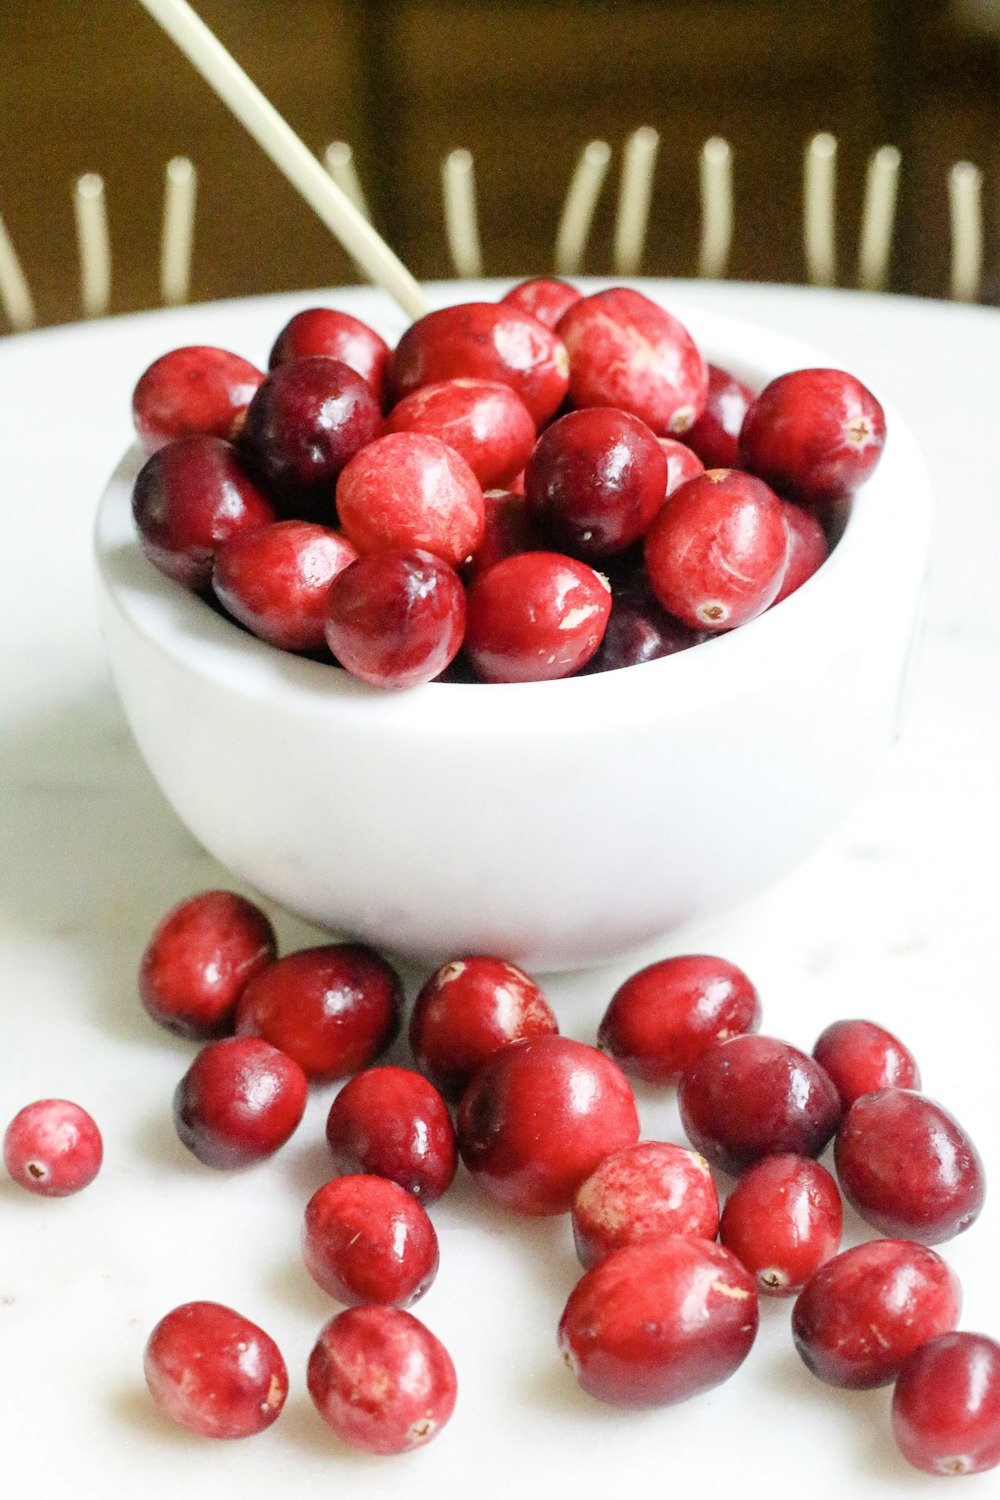 red cherries in white ceramic bowl